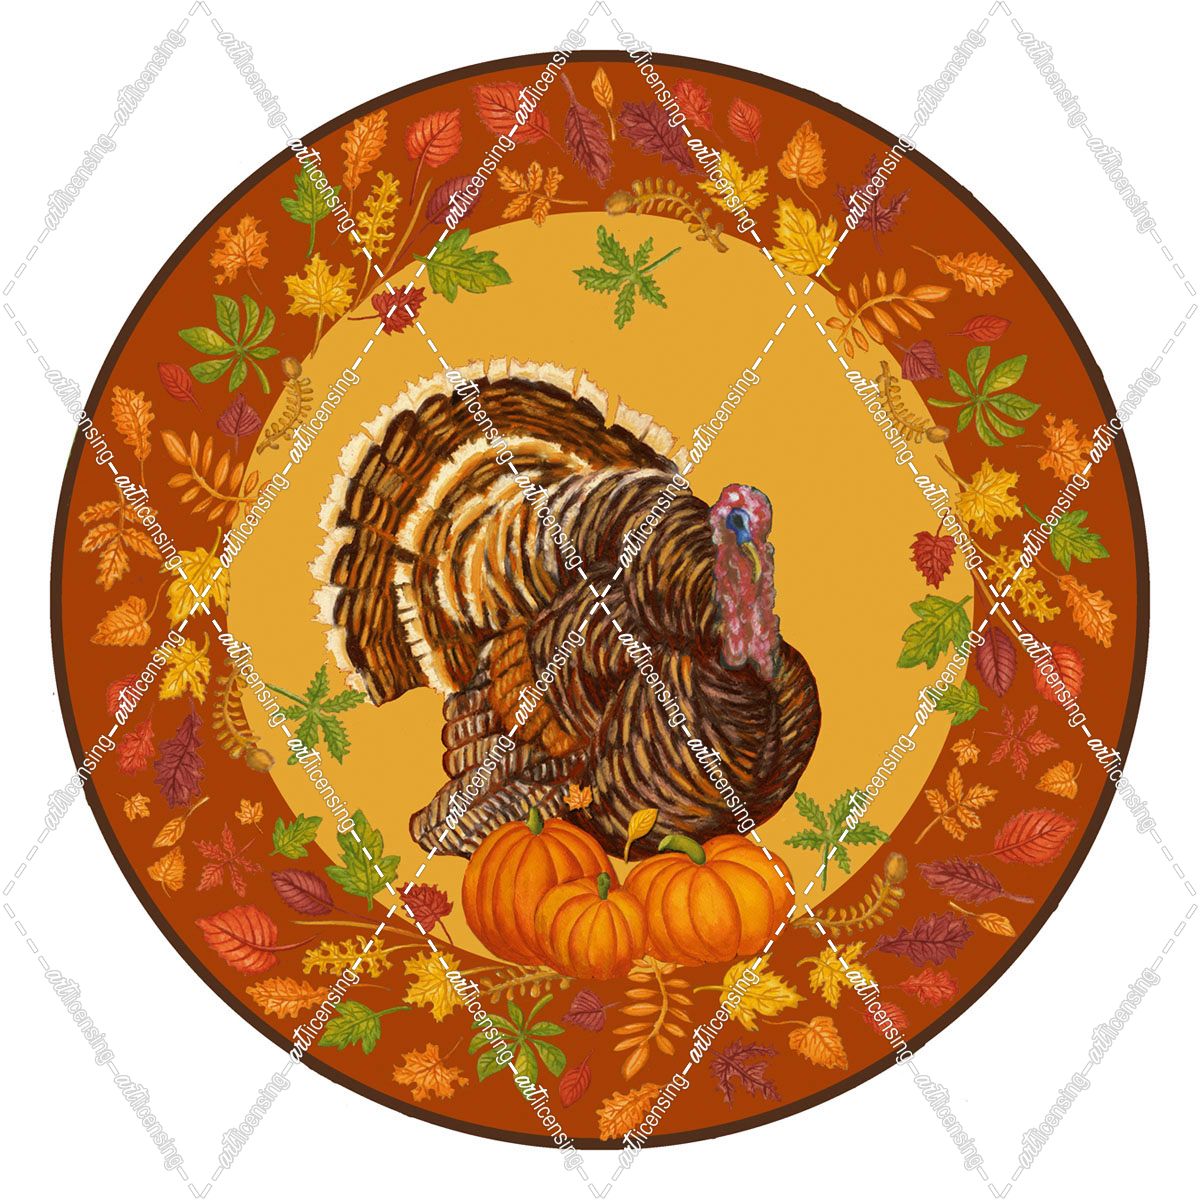 Game Bird Turkey Plate W Pumpkins Leaves